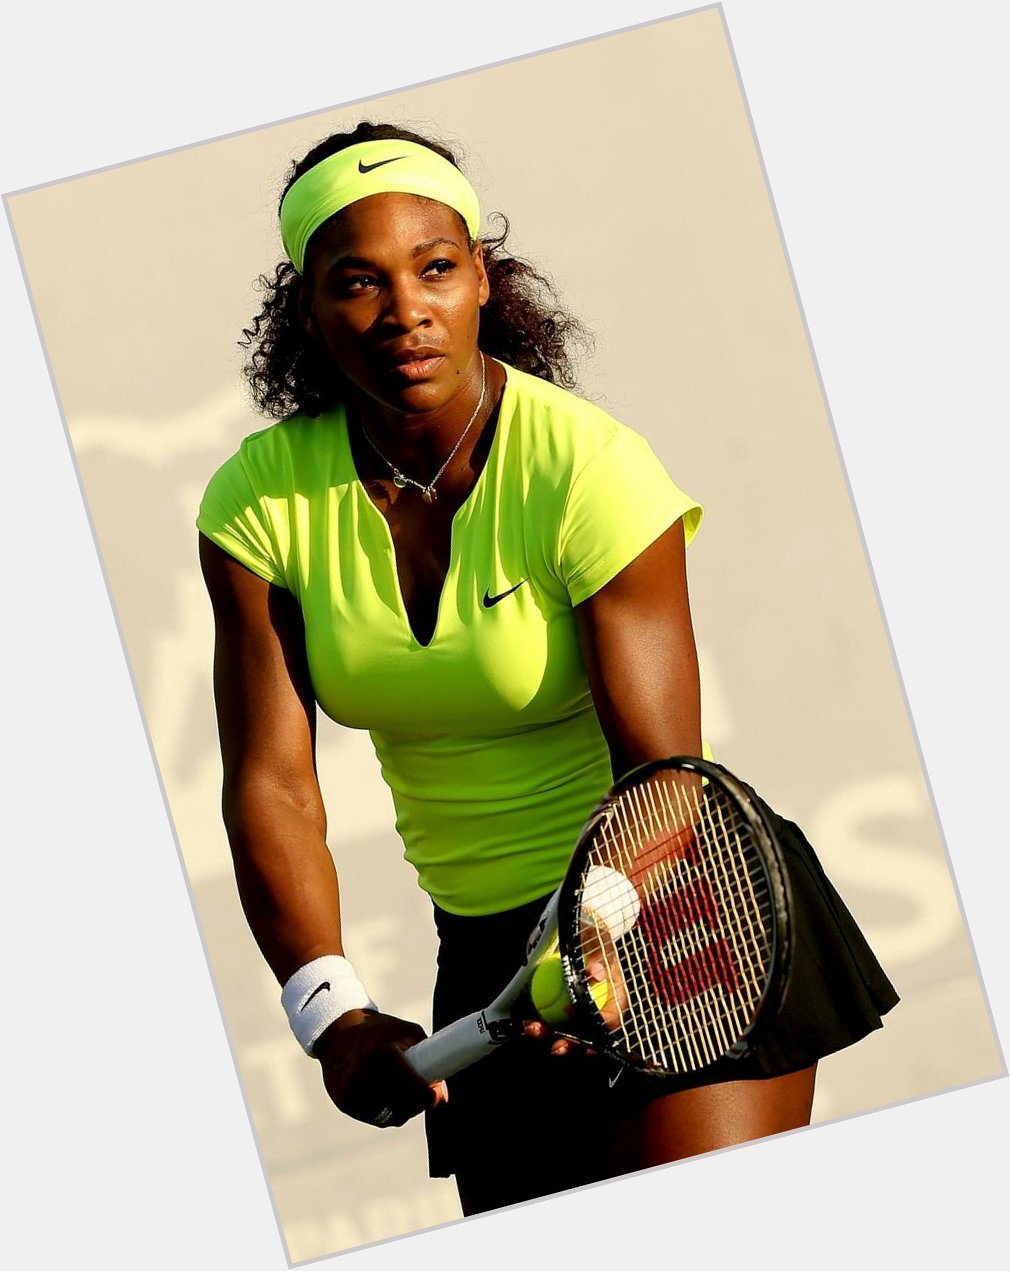 Happy Birthday, Serena Williams, born September 26th, 1981 in Saginaw, Michigan. 